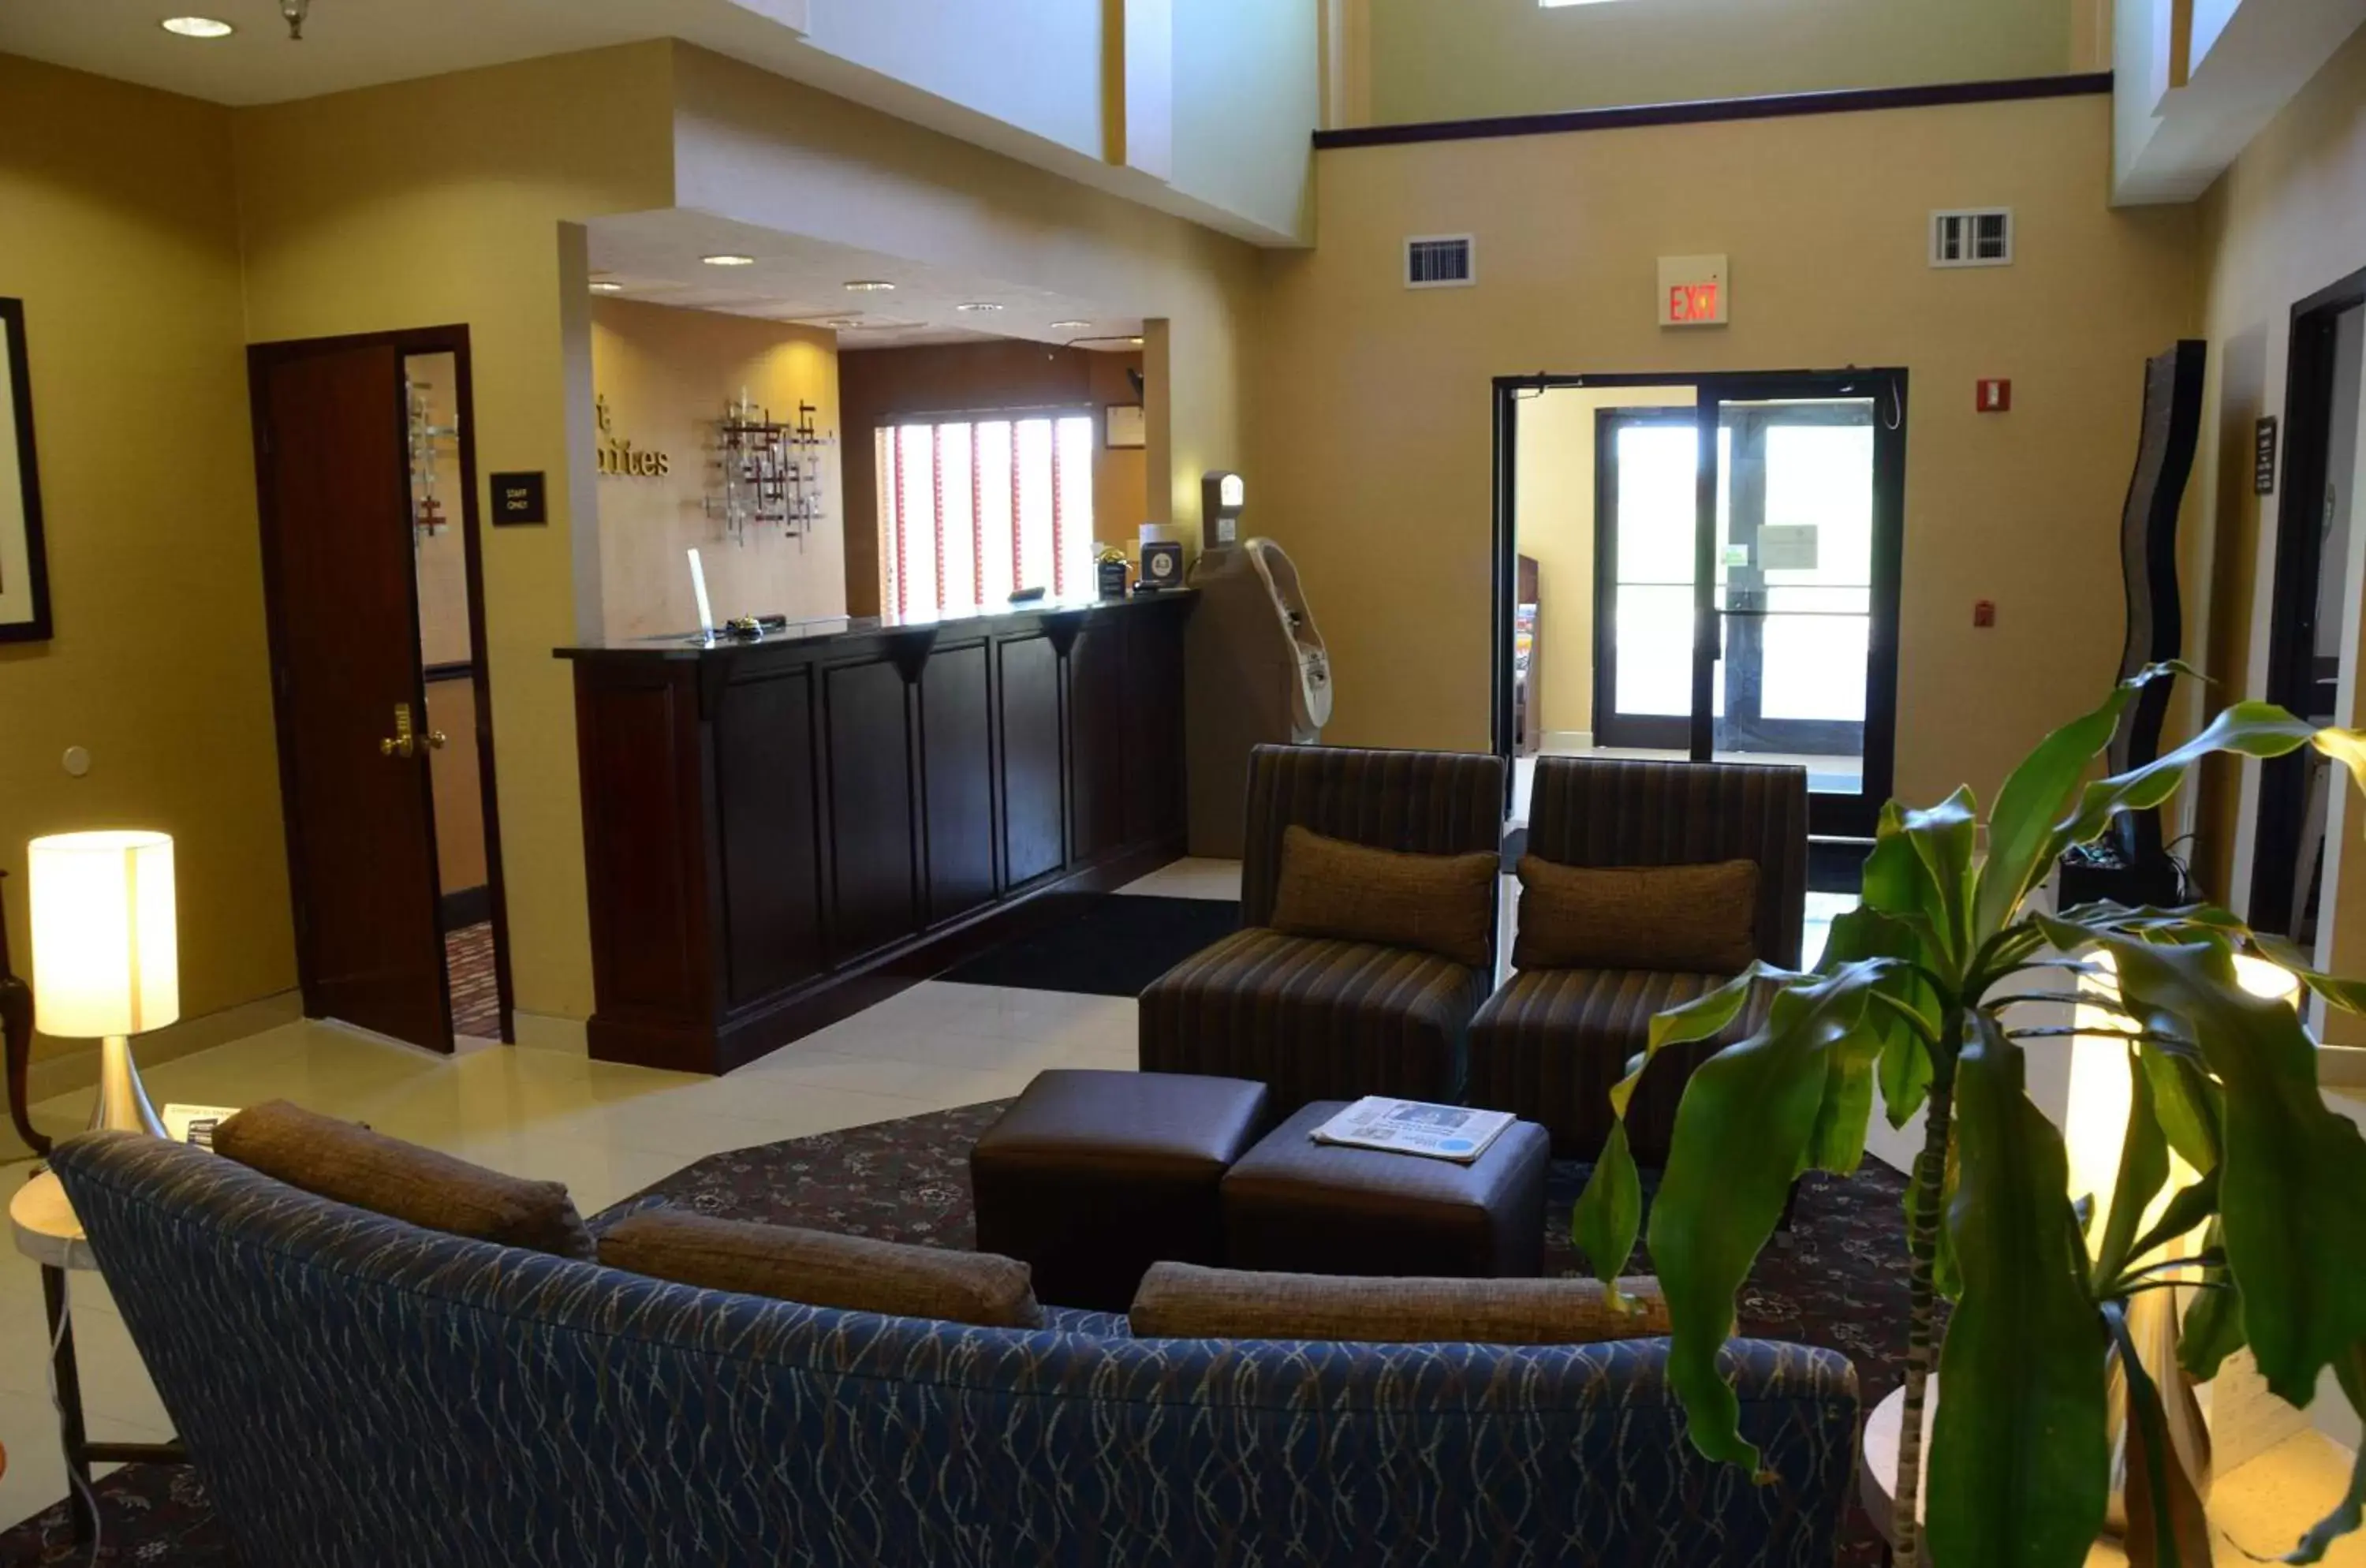 Lobby or reception in Best Western Joliet Inn & Suites